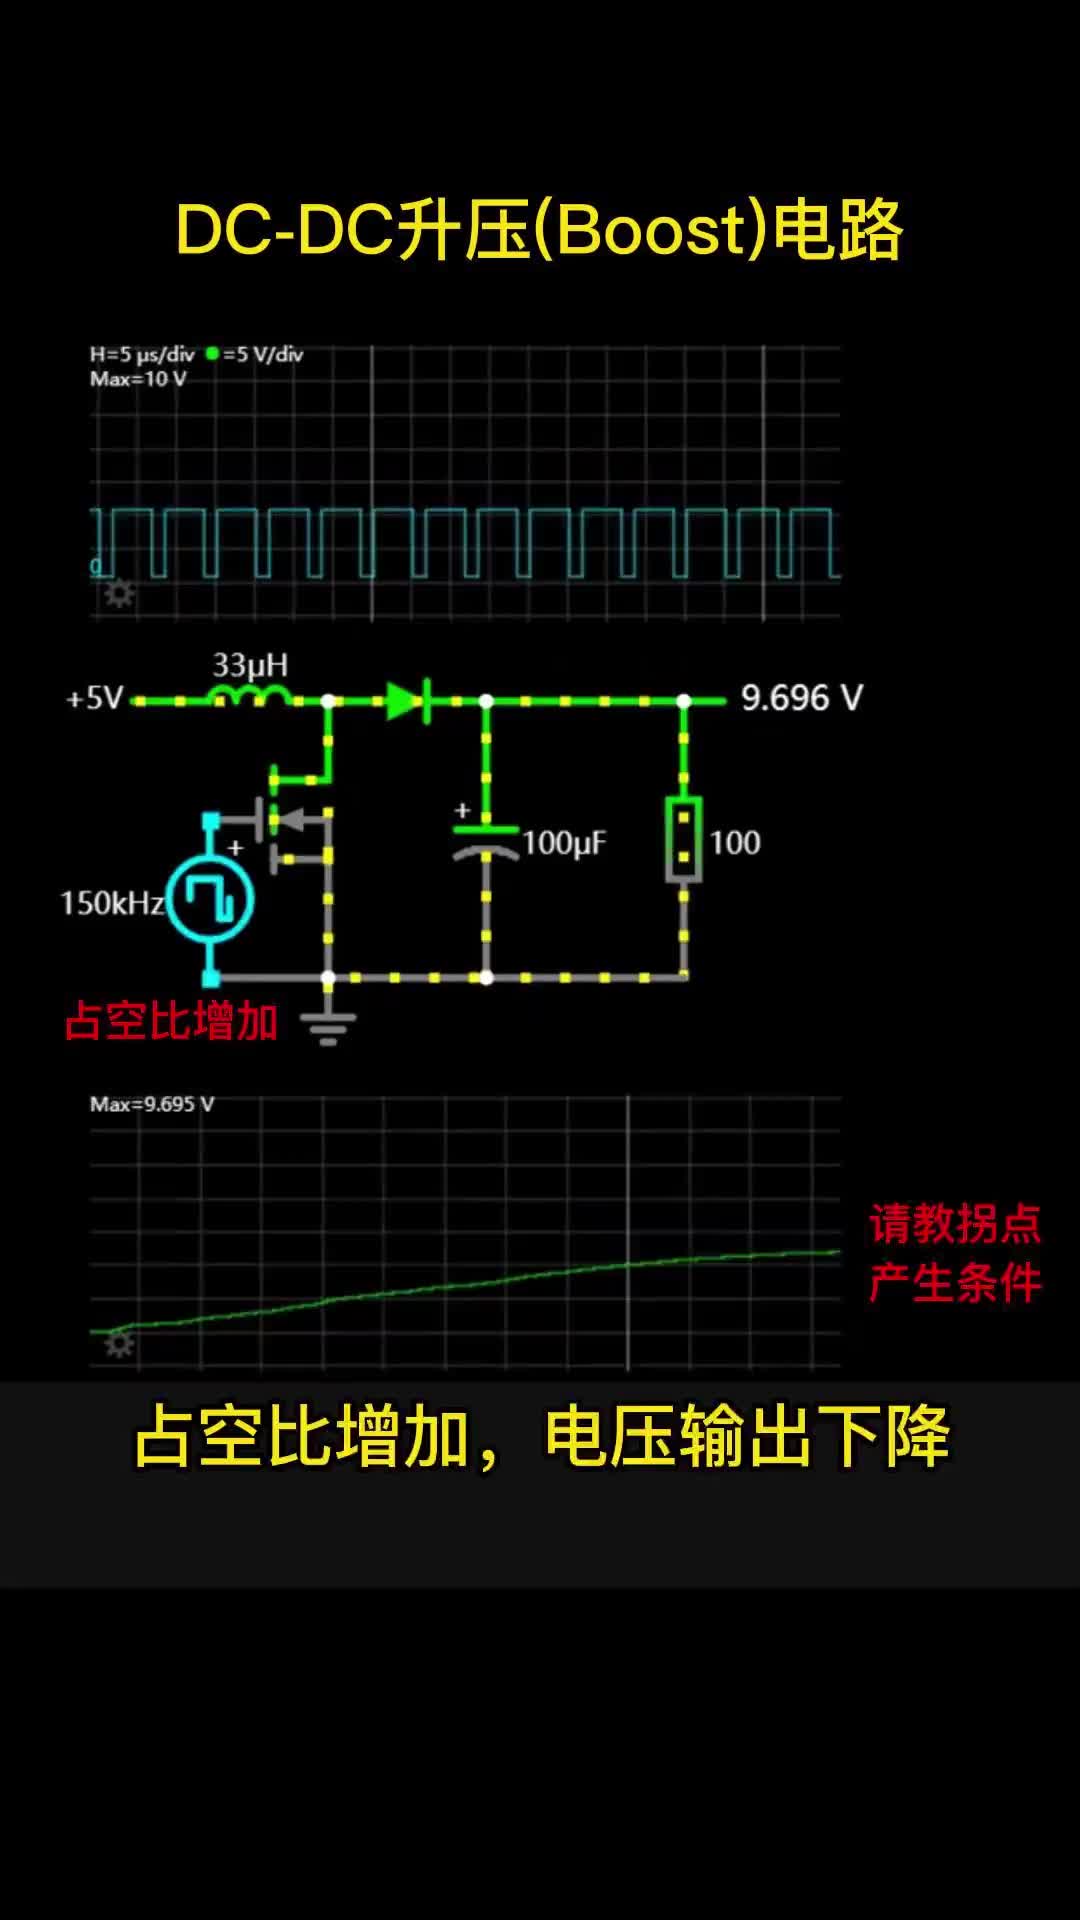 00014 DC-DC升压（boost）电路，演示MOS管的开关控制PWM的占空比增加，输出电压的变化过程, 